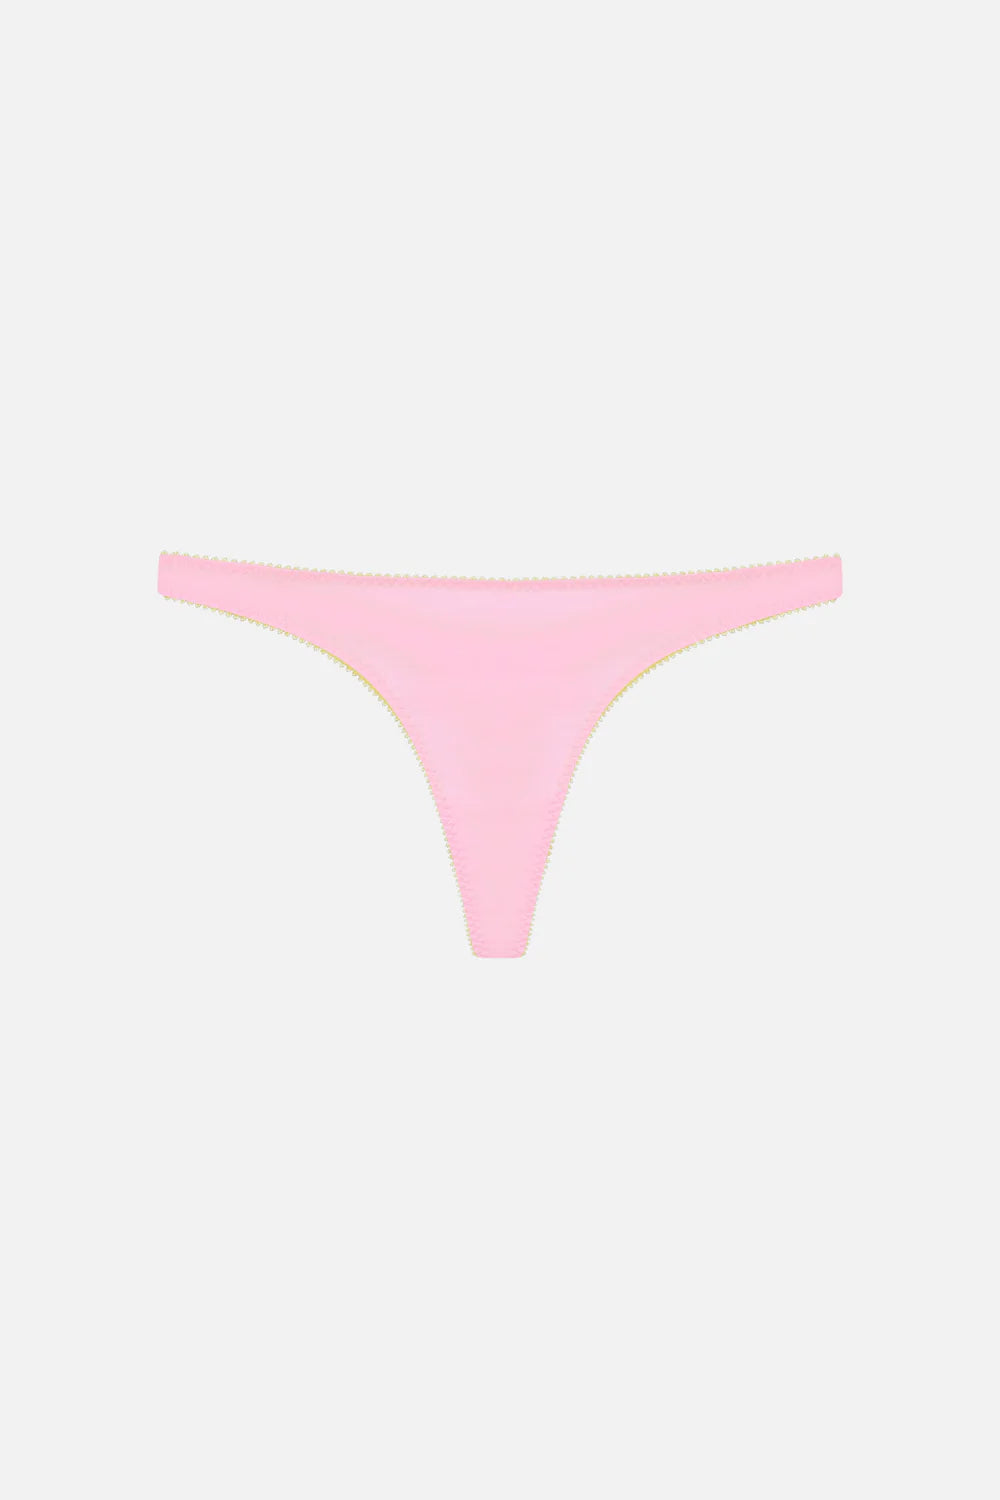 Vintage Kmart Pink K Cotton Bikini Thong Panty 